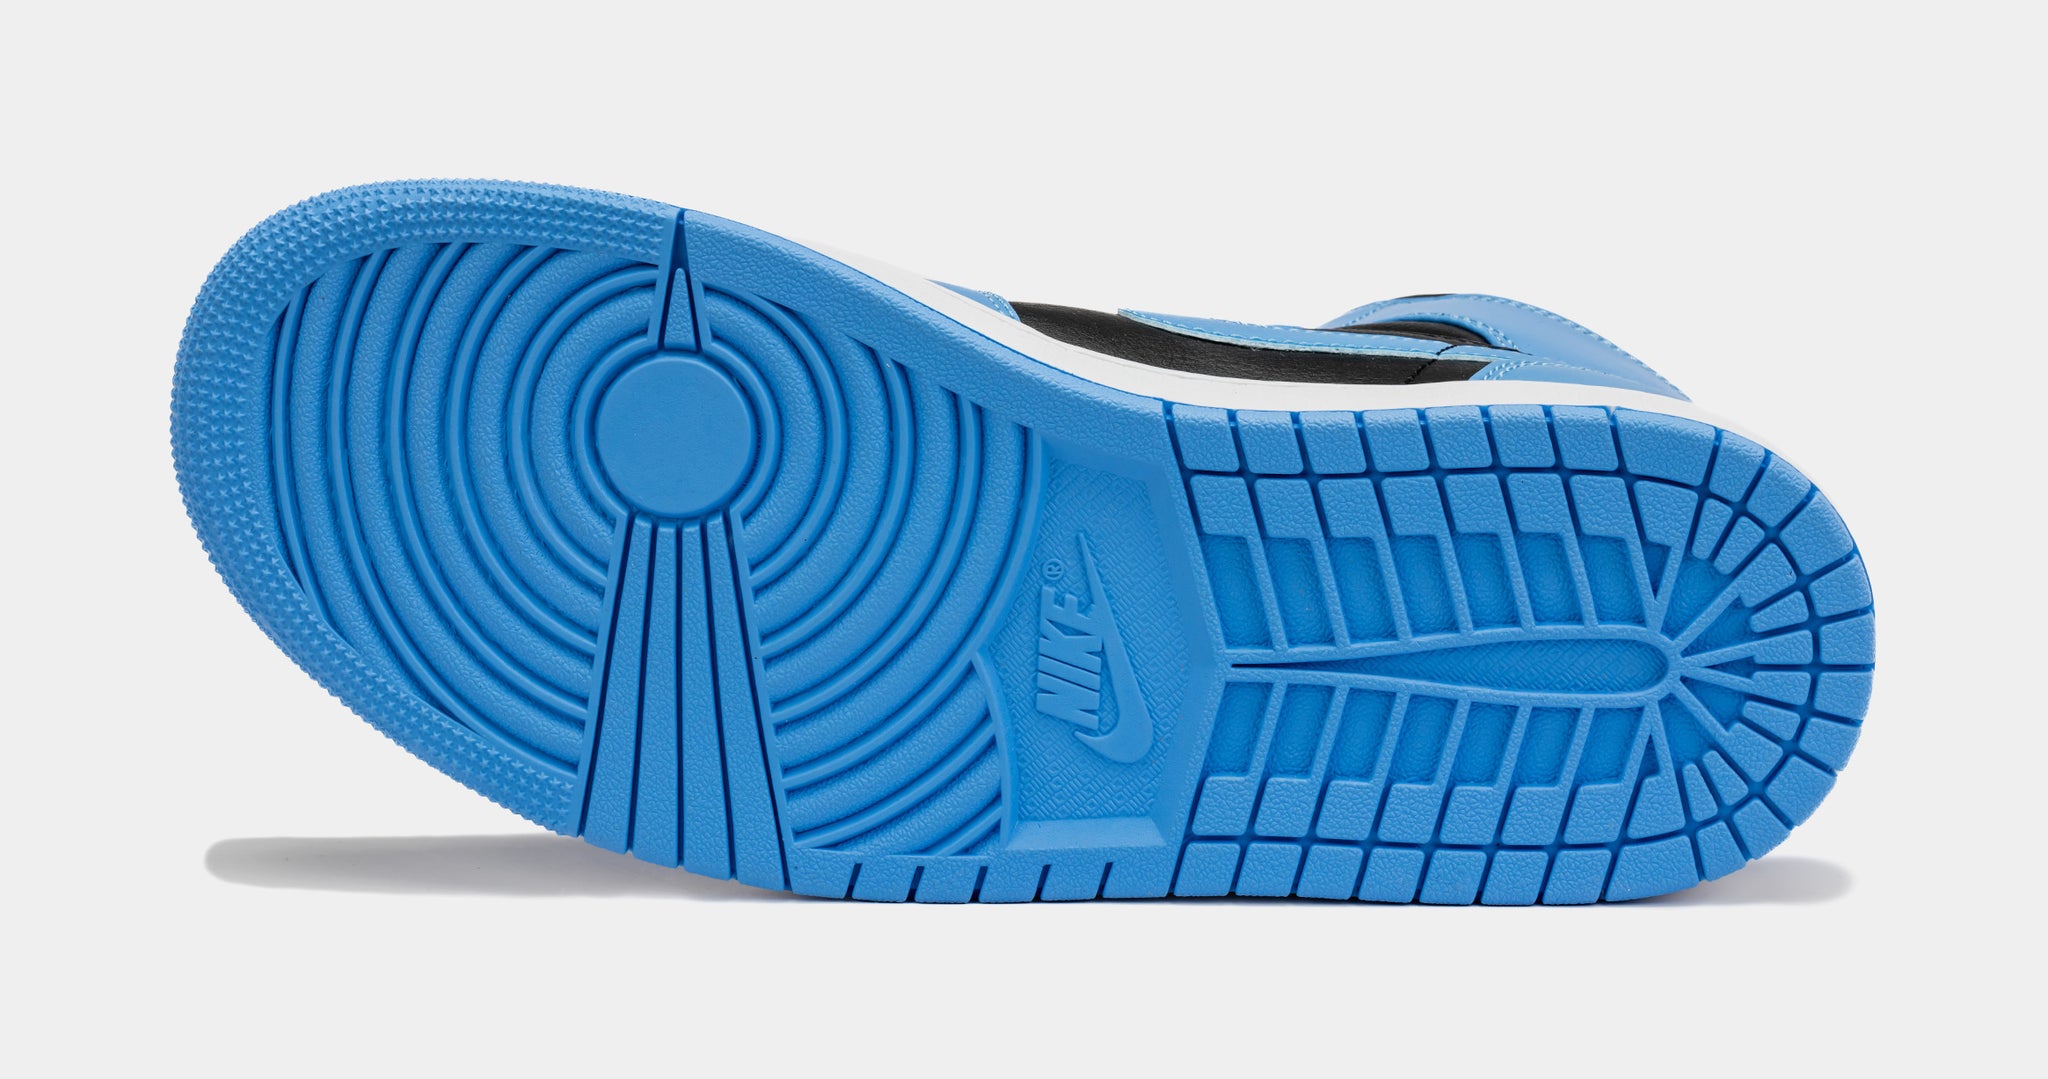 OFF-WHITE Nike Air Force 1 Mid on Feet Sneaker HONEST LEGIT REVIEW